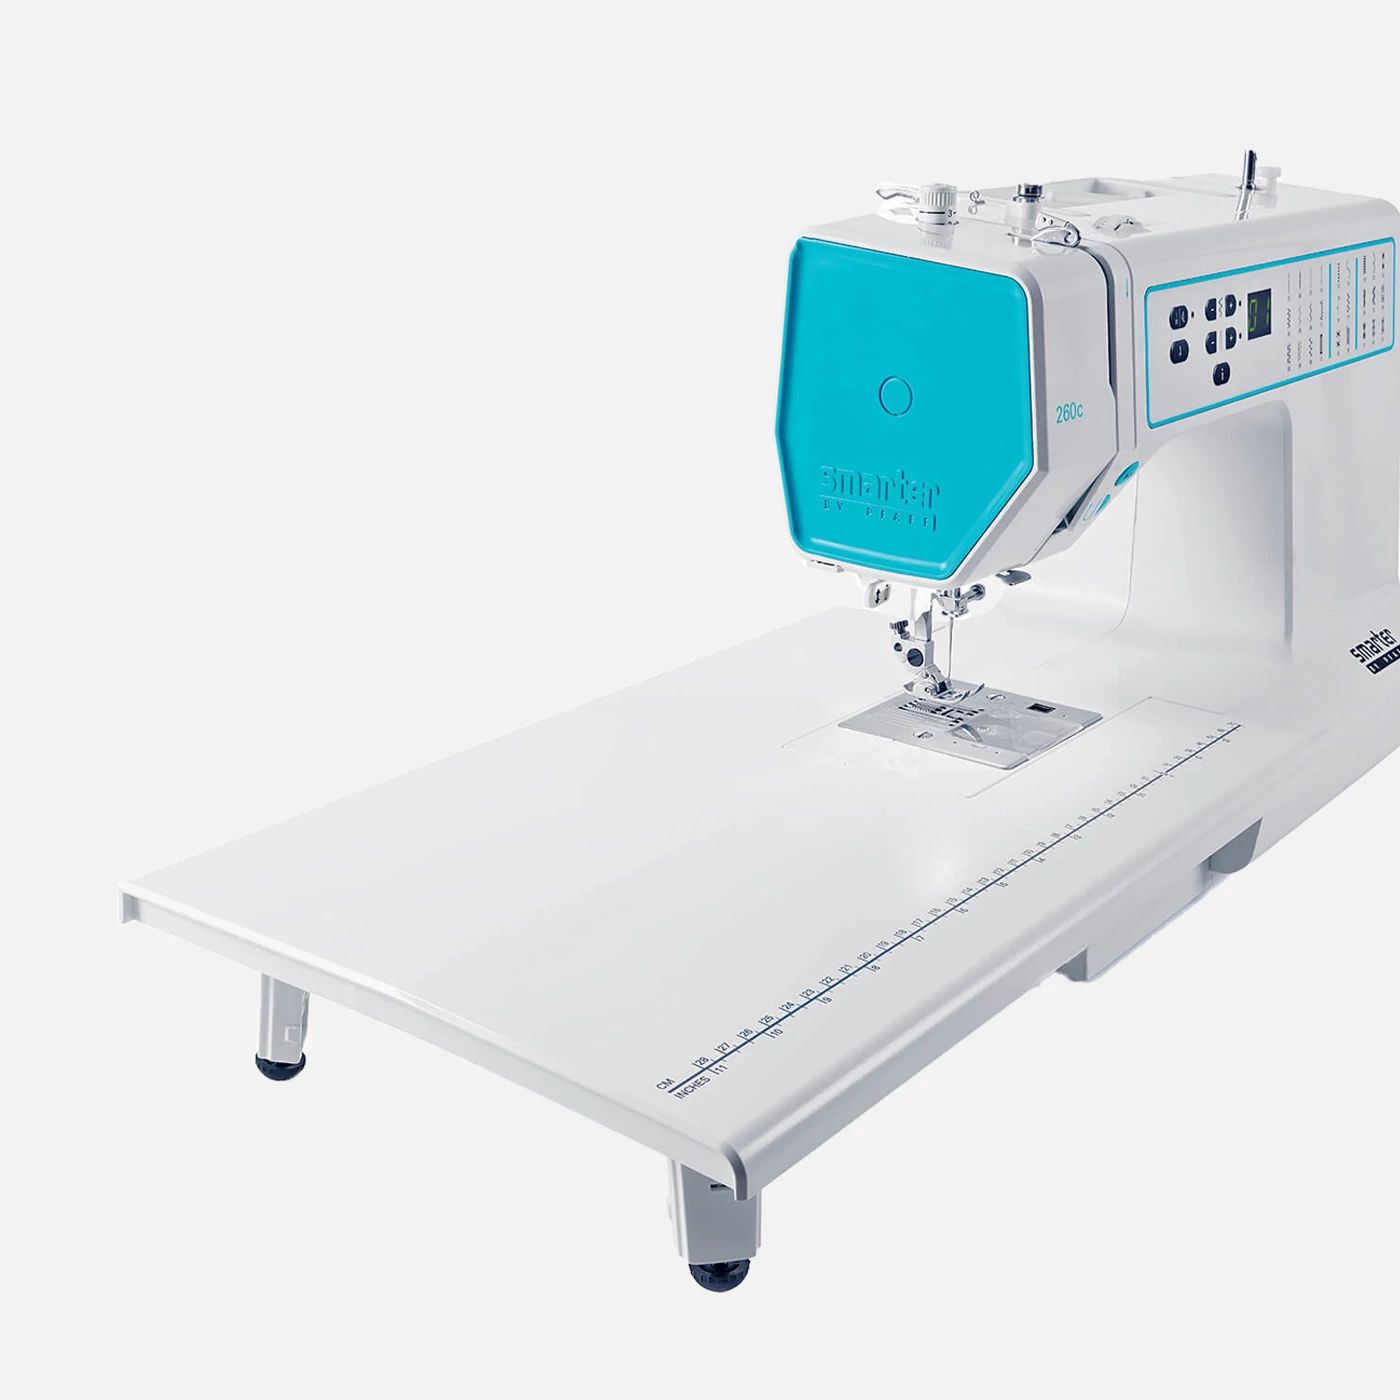 Pfaff Smarter 140s sewing machine